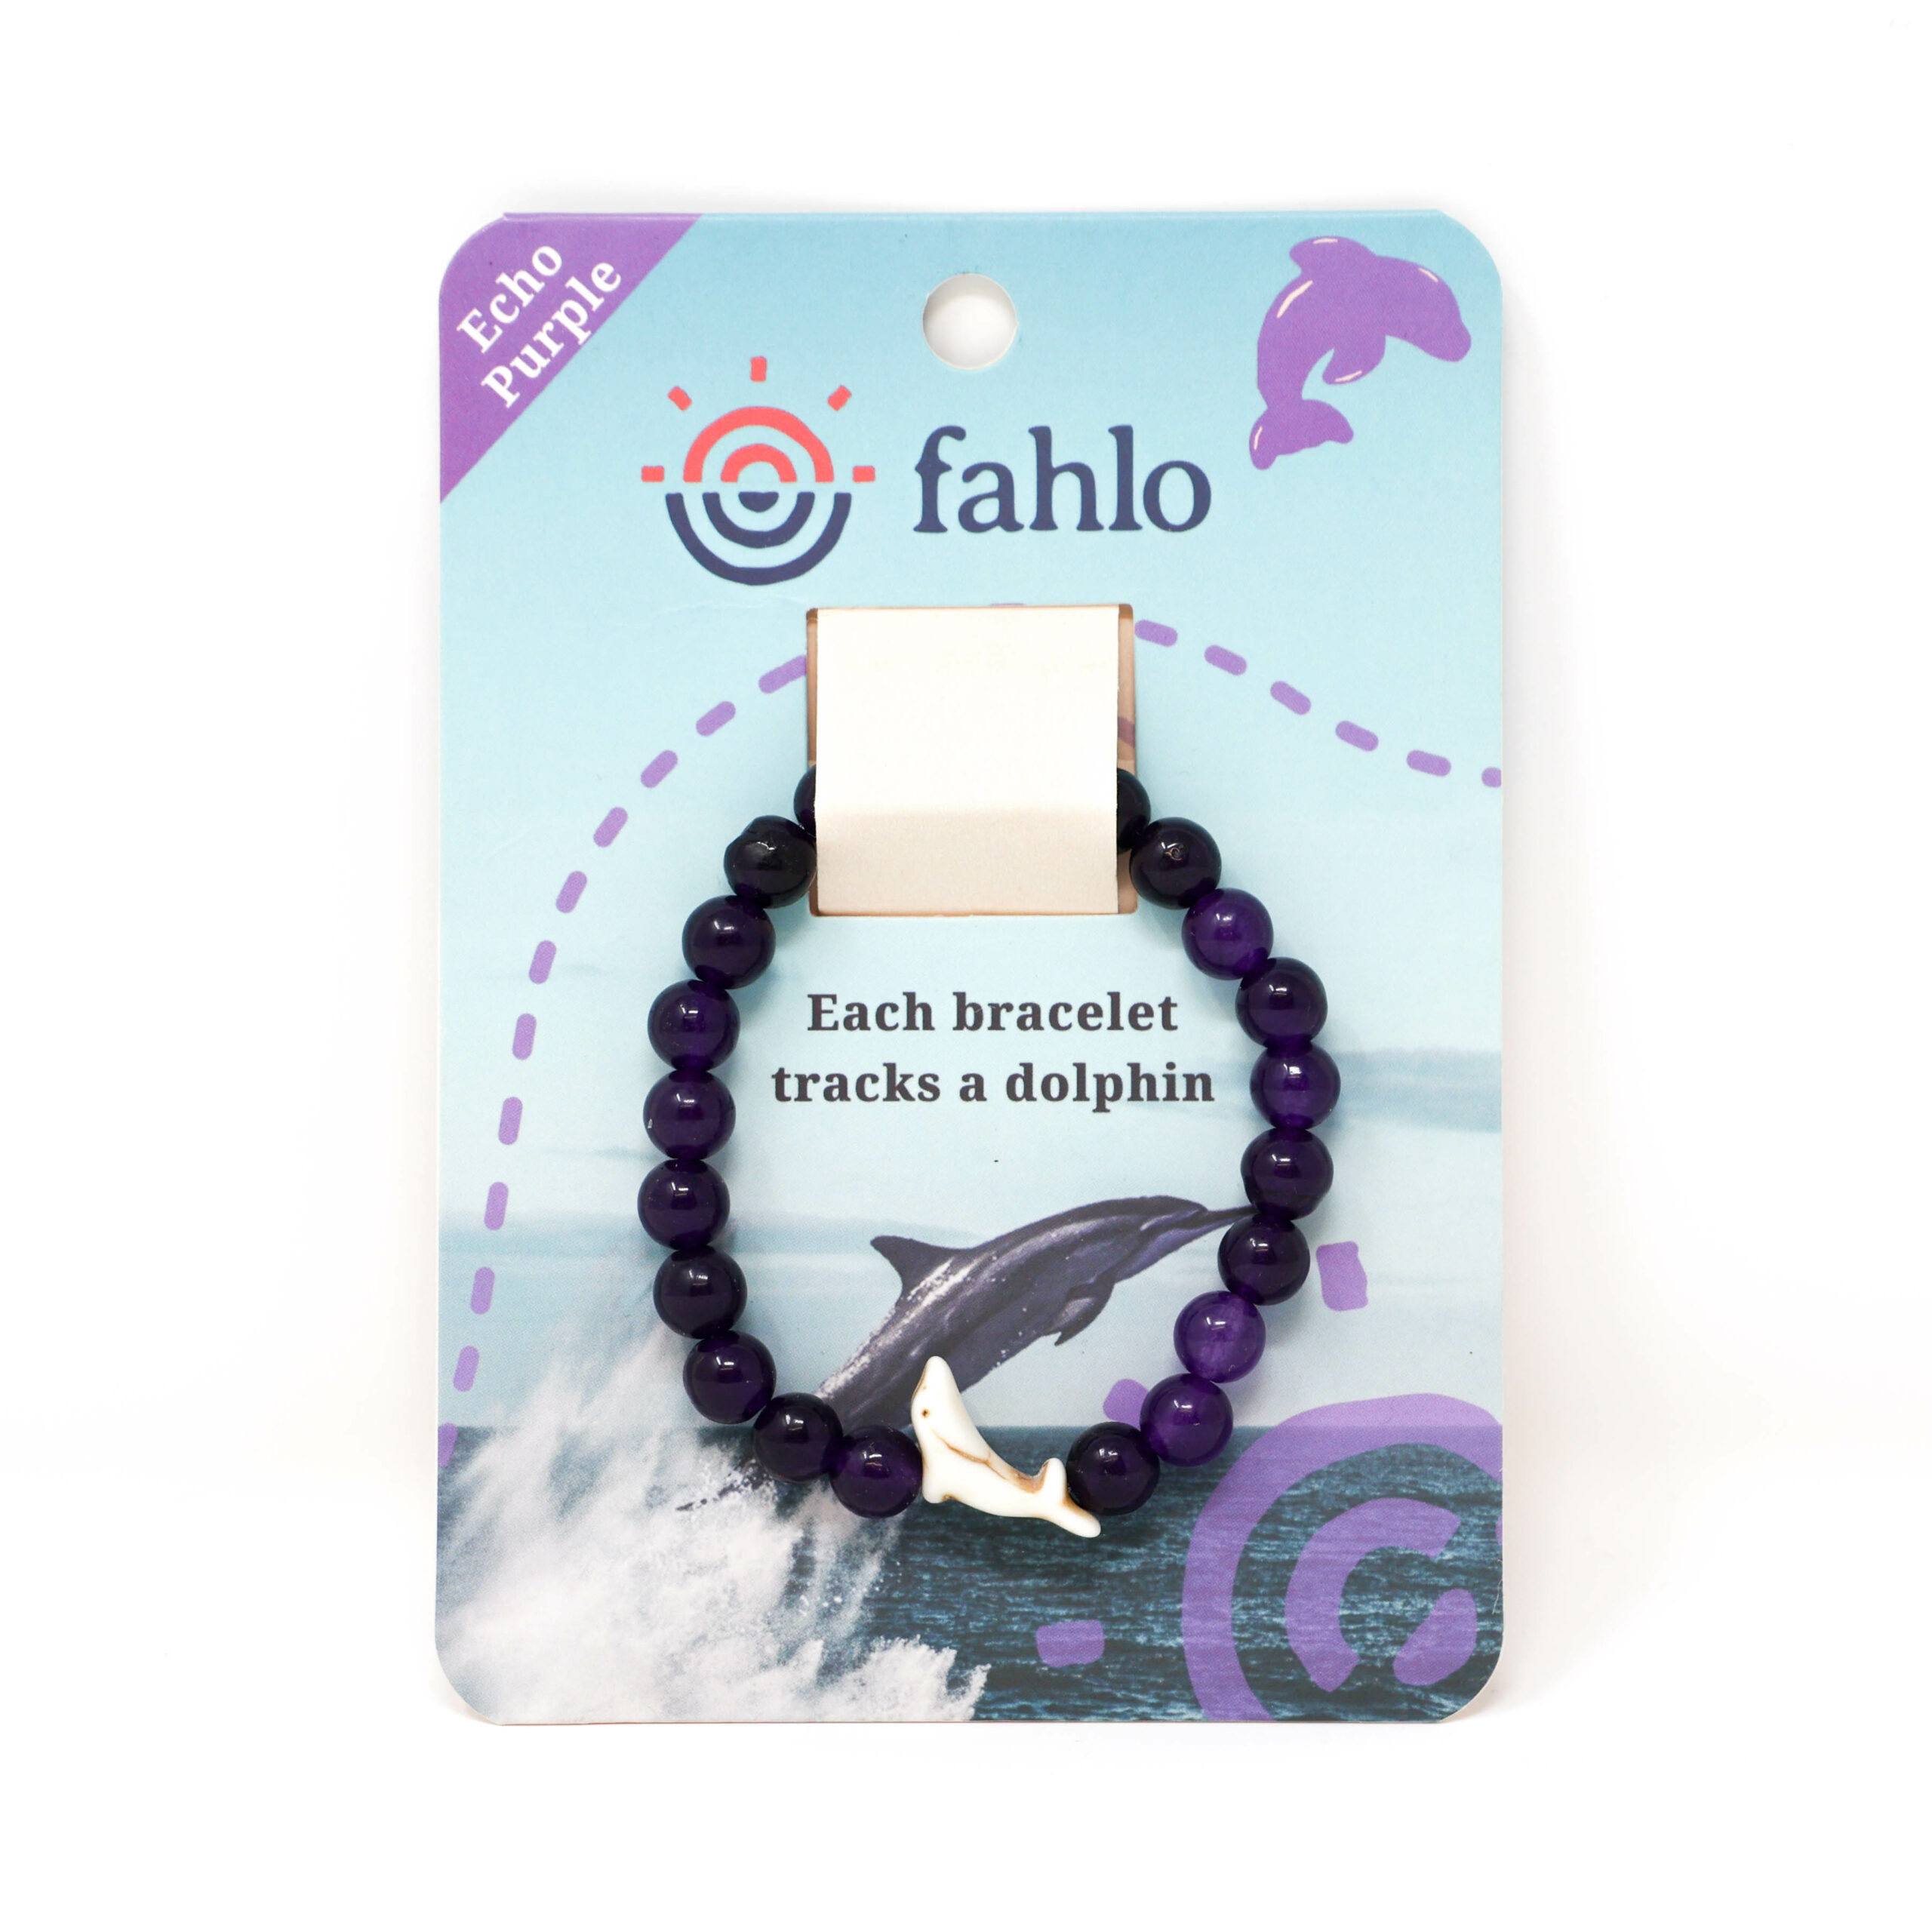 Fahlo Animal Tracking Bracelet Dolphin - Wild Planet Trust Shop